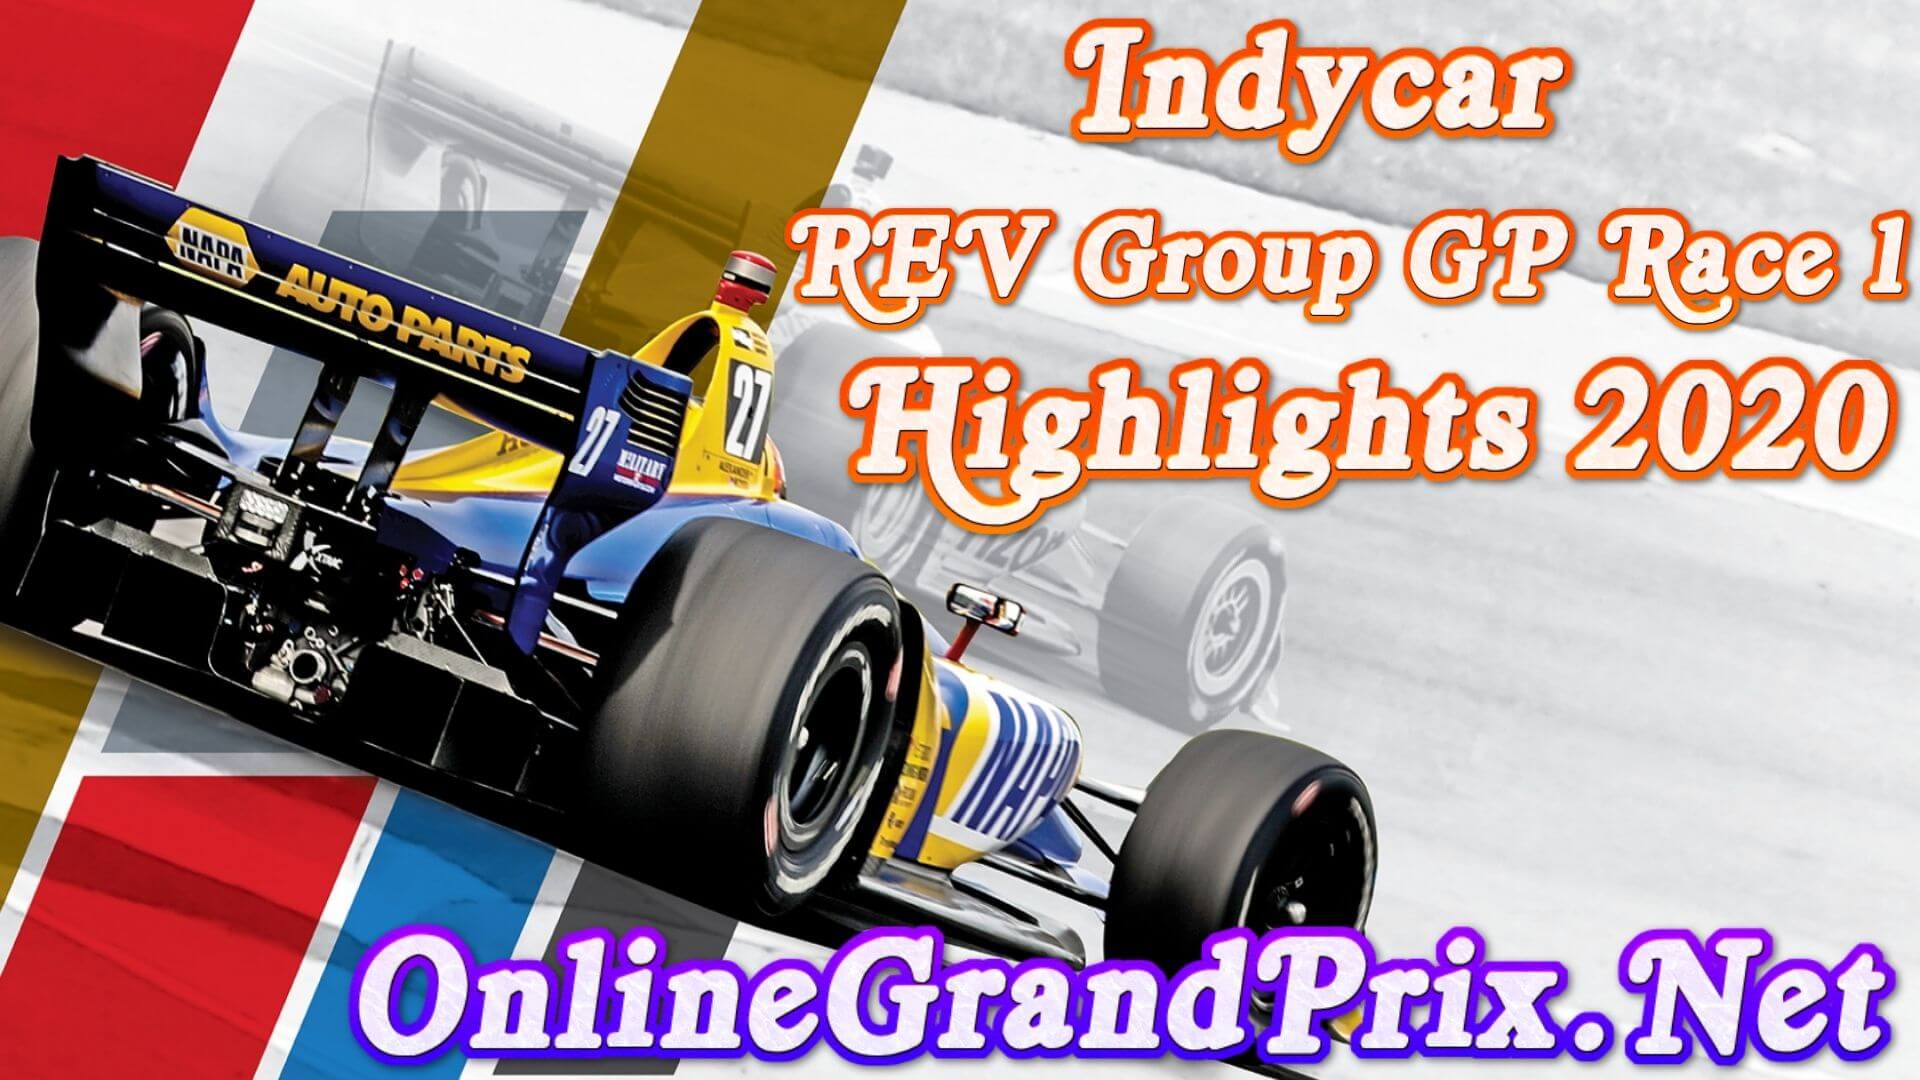 REV Group Grand Prix Race 1 Highlights INDYCAR 2020